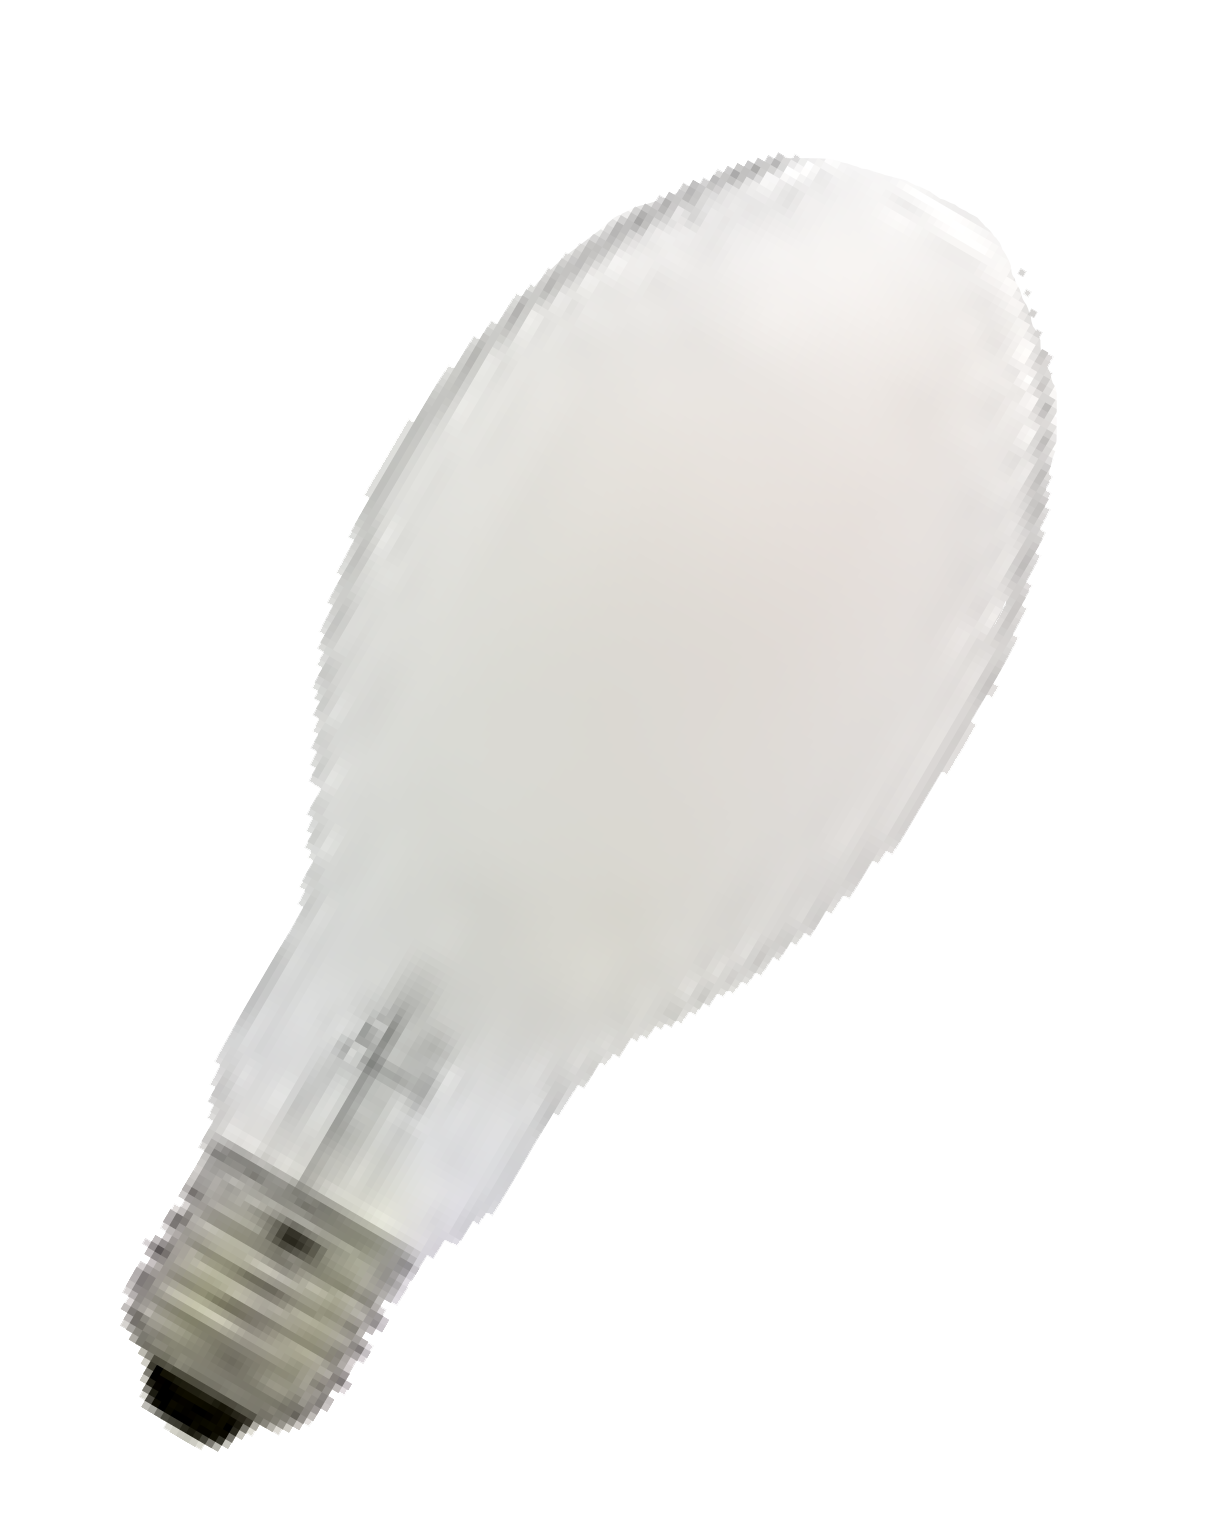 HPSV Eliptical Lamp Image